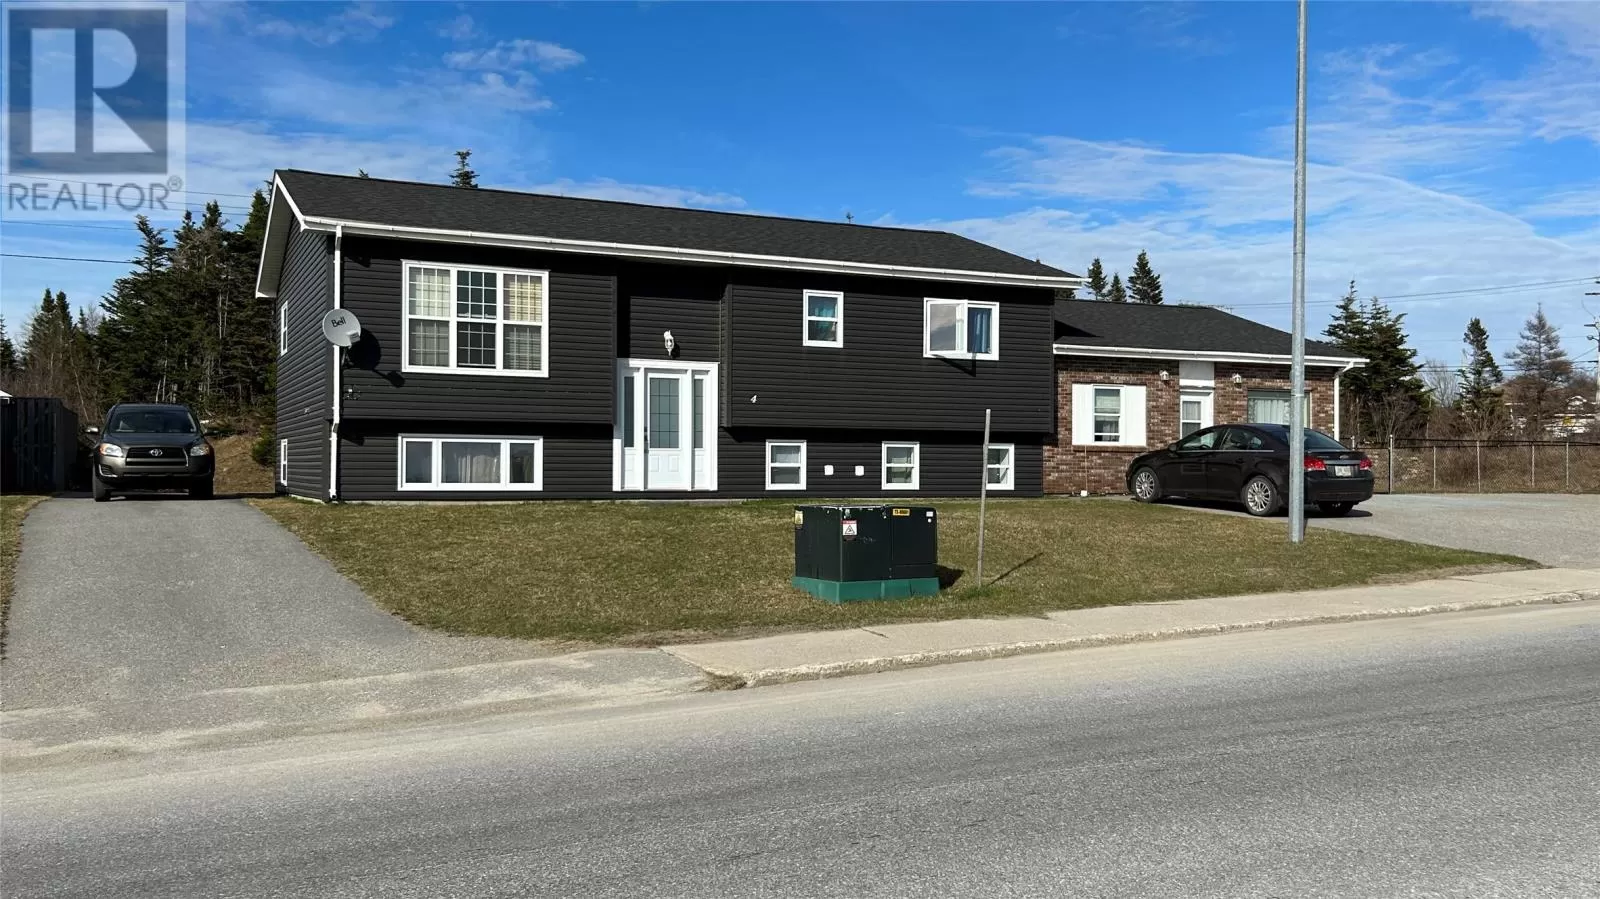 Multi-Family for rent: 4 Bruce Boulevard, Stephenville, Newfoundland & Labrador A2N 3R6